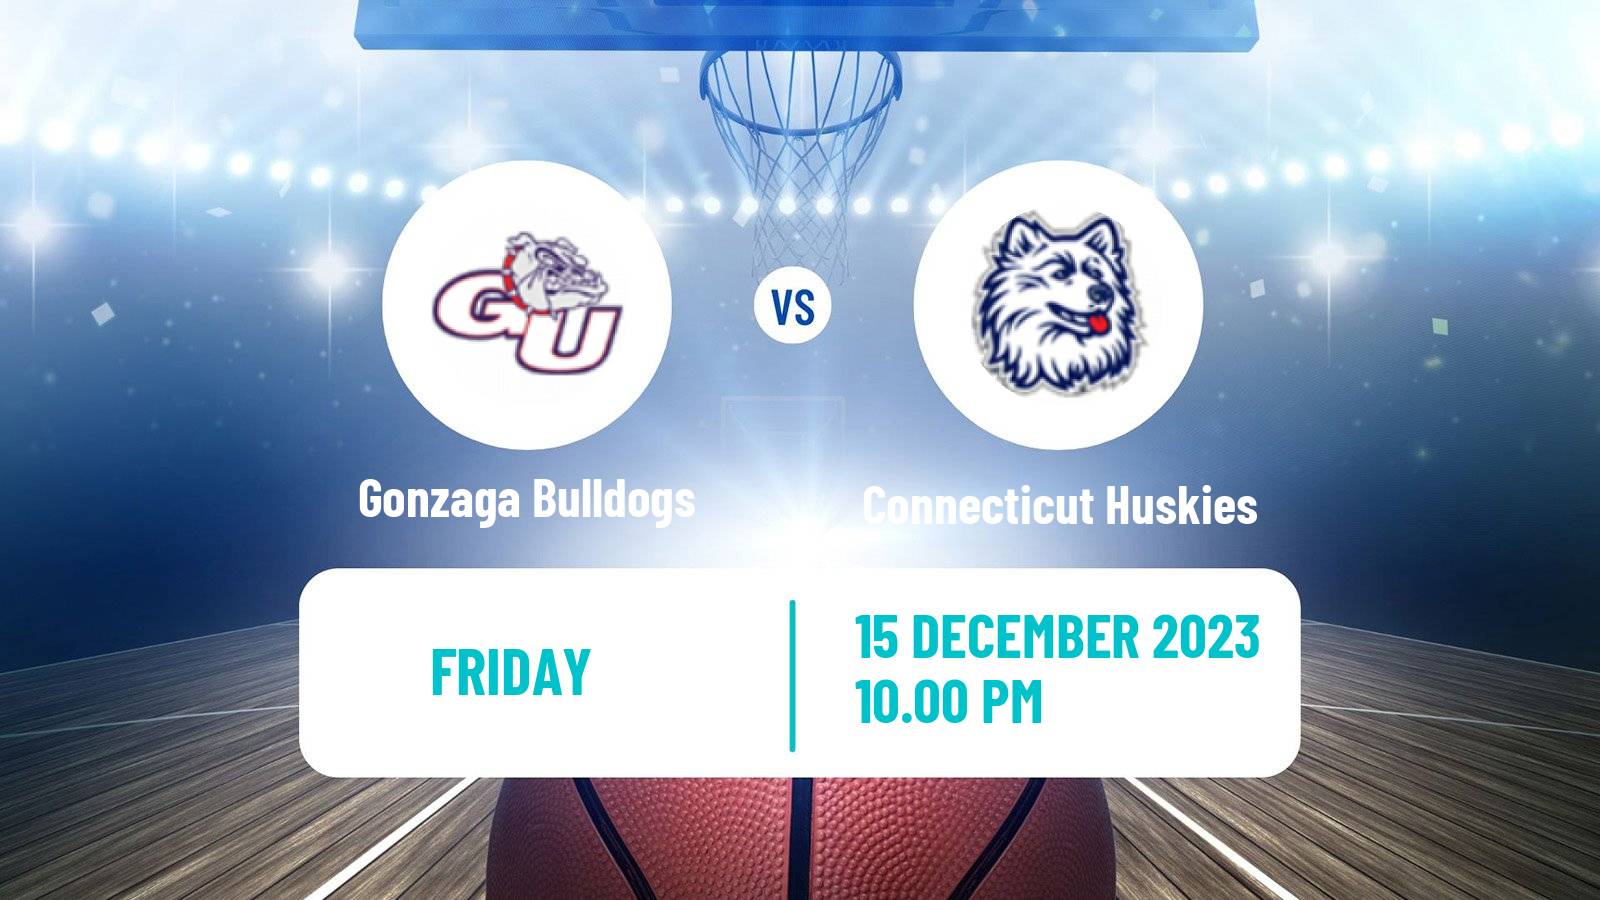 Basketball NCAA College Basketball Gonzaga Bulldogs - Connecticut Huskies